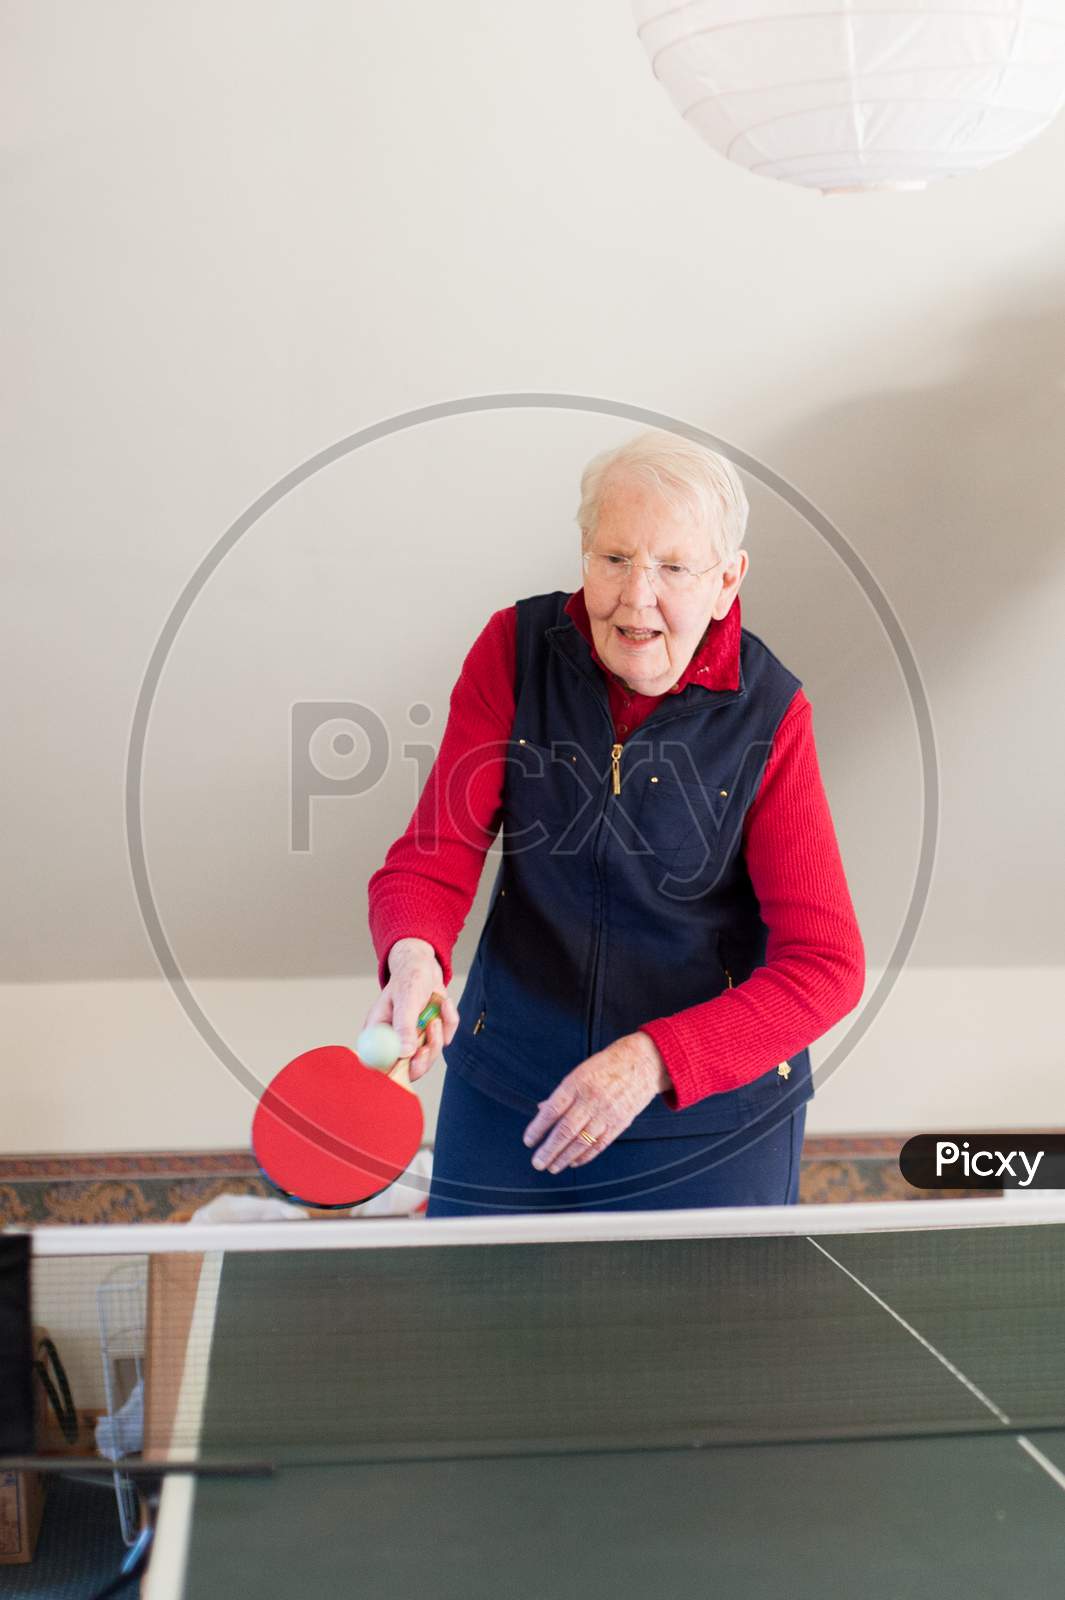 An Elderly Lady Plays Table Tennis